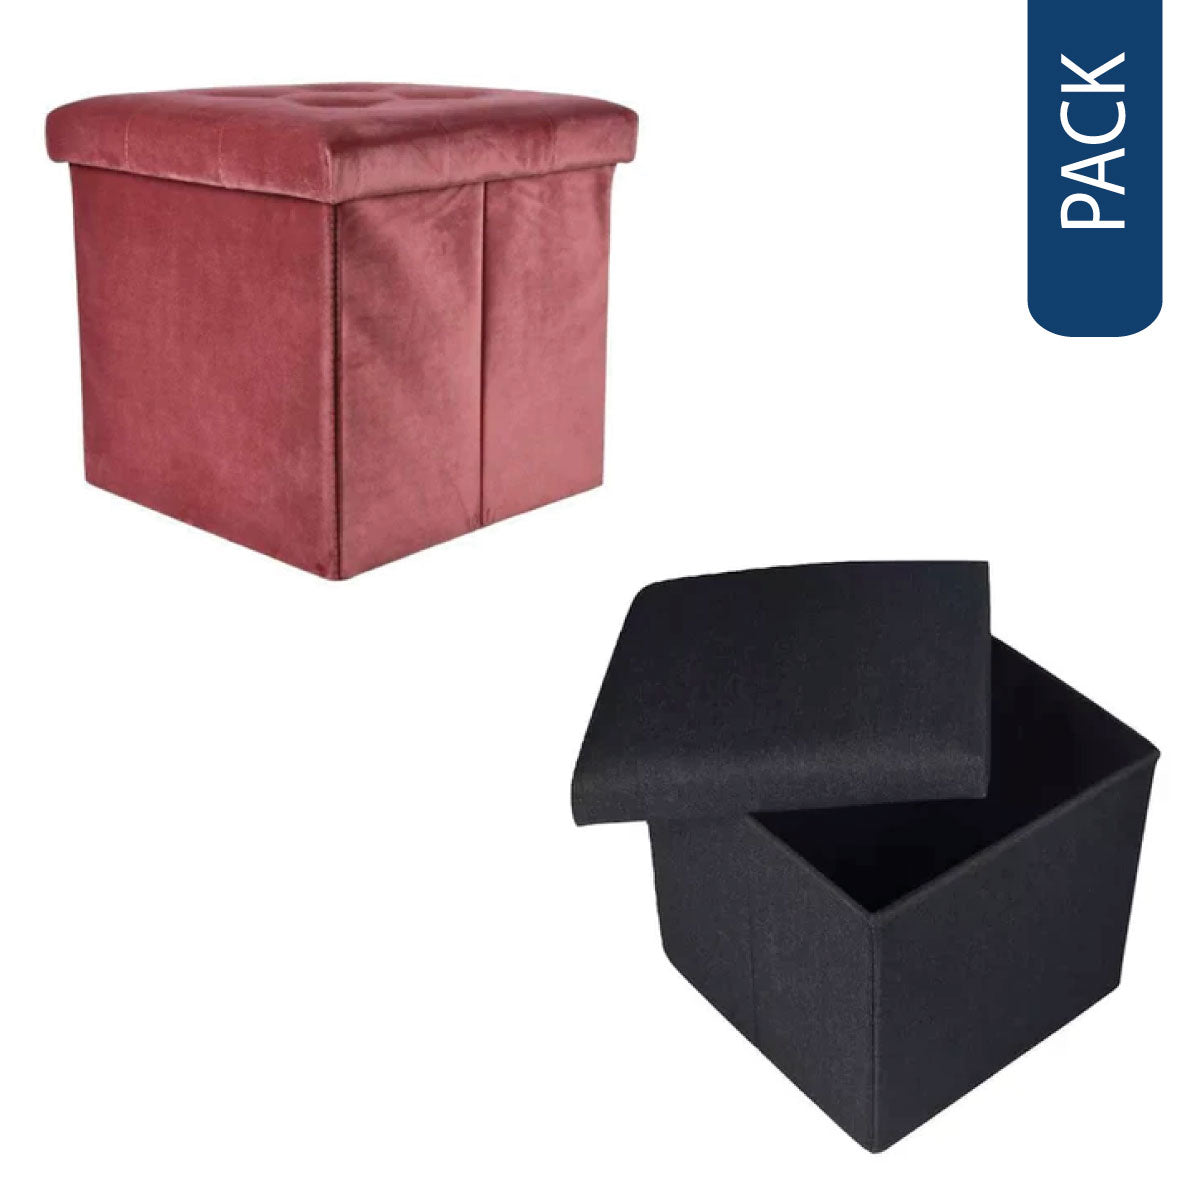 Pack pouf baul begônia cubo organizador plegable rosado y negro [Openbox]